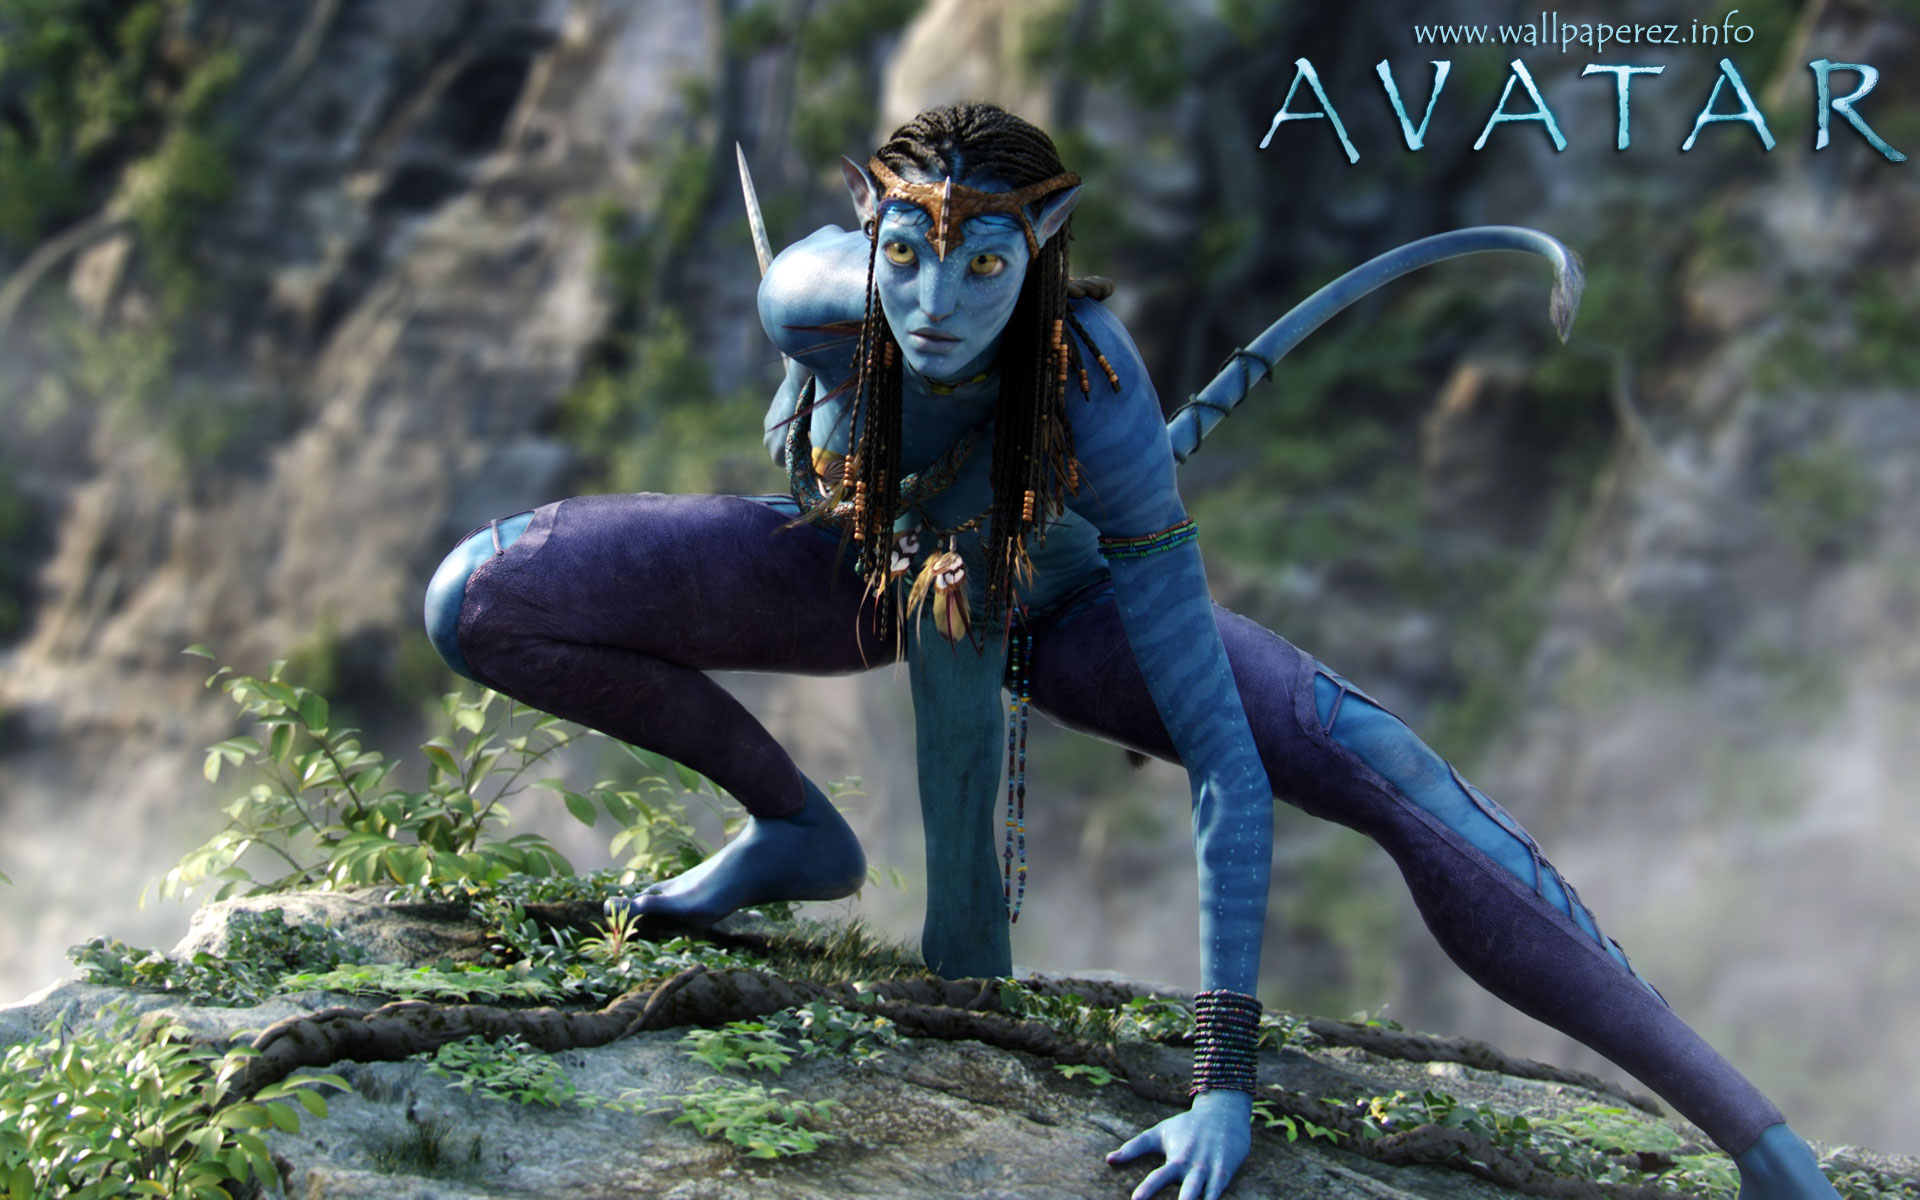 Avatar Movie Wallpaper Posters Desktop